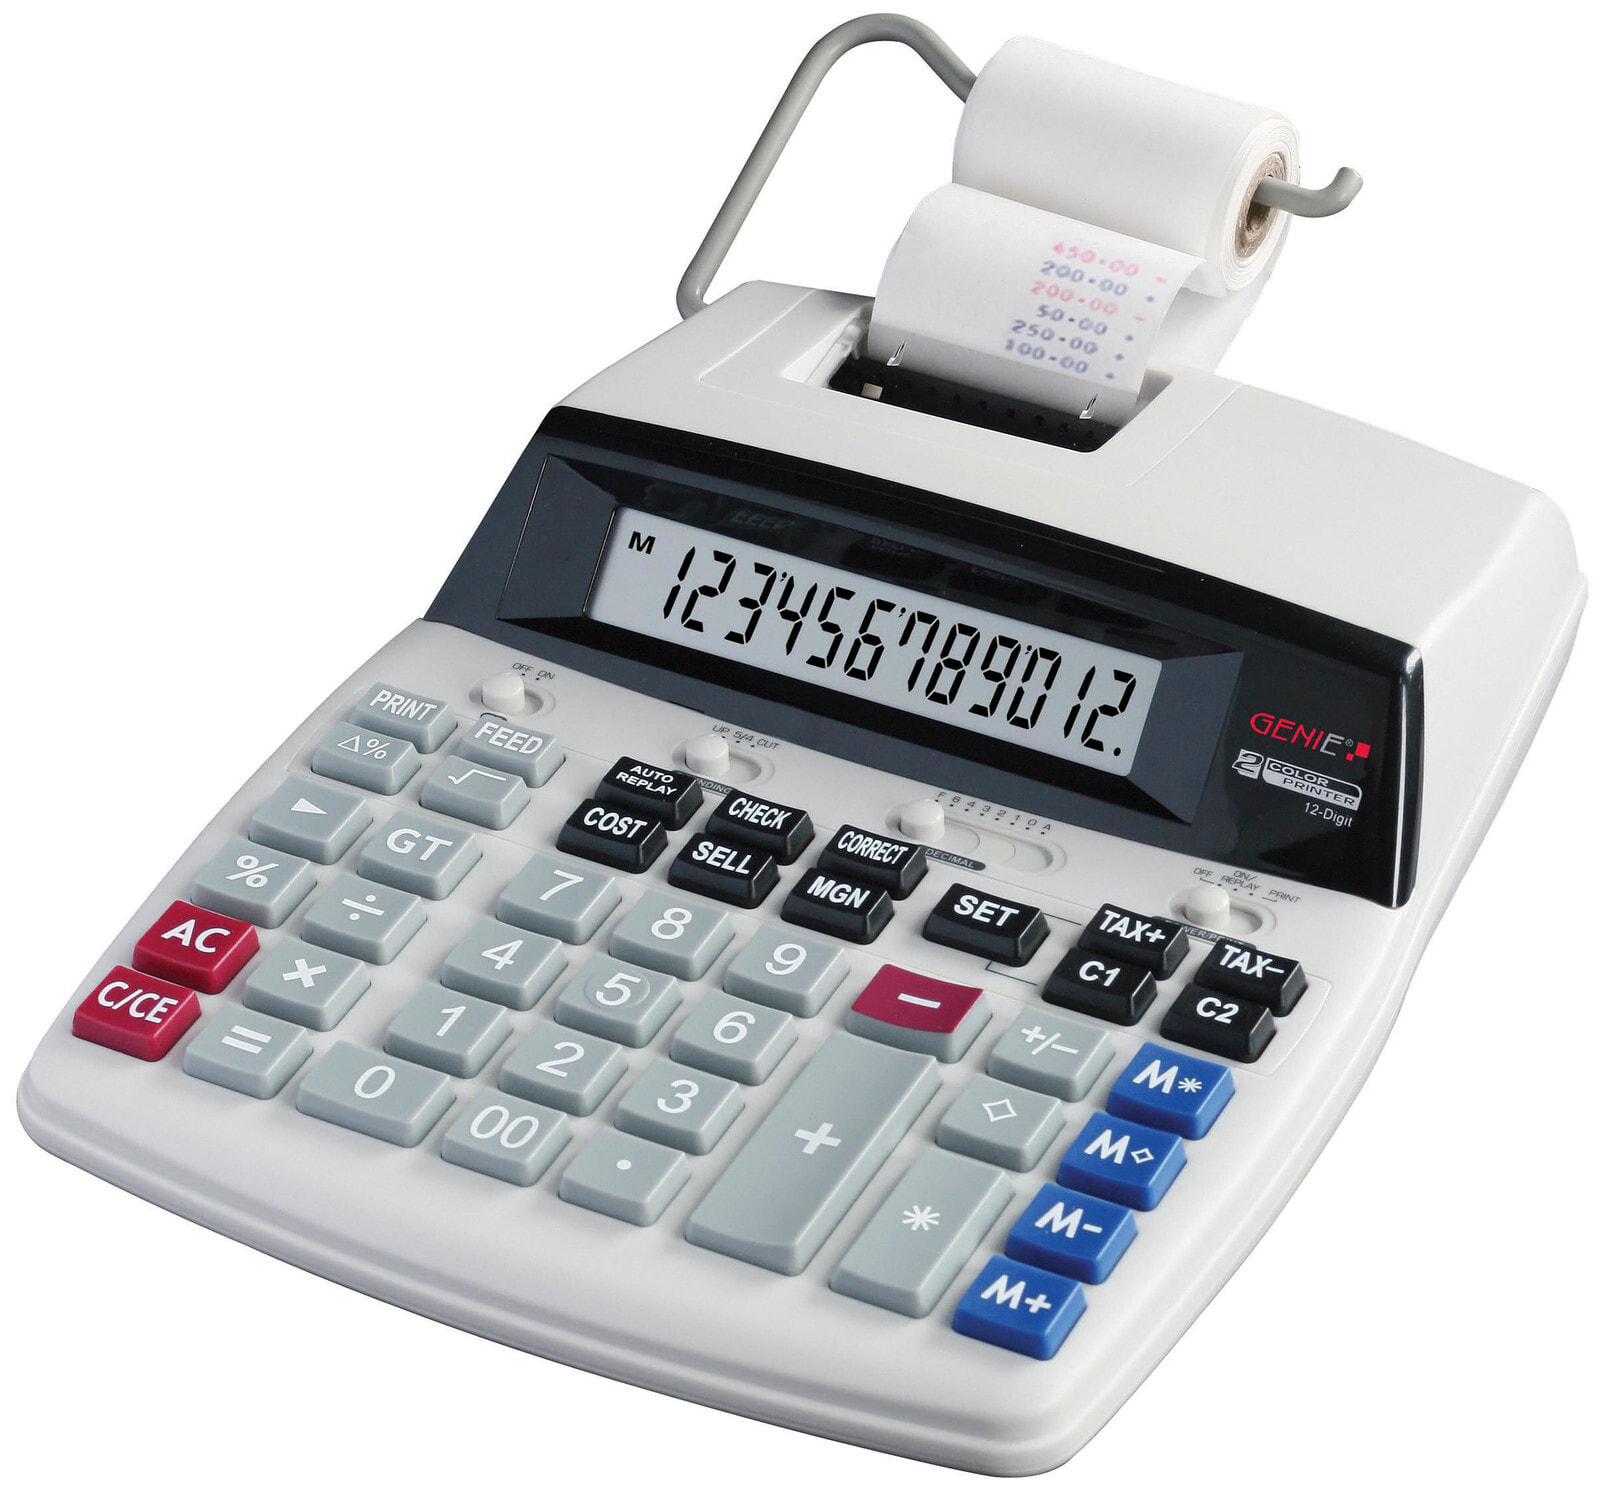 Genie D69 Plus калькулятор Настольный Печатающий Серый 11891